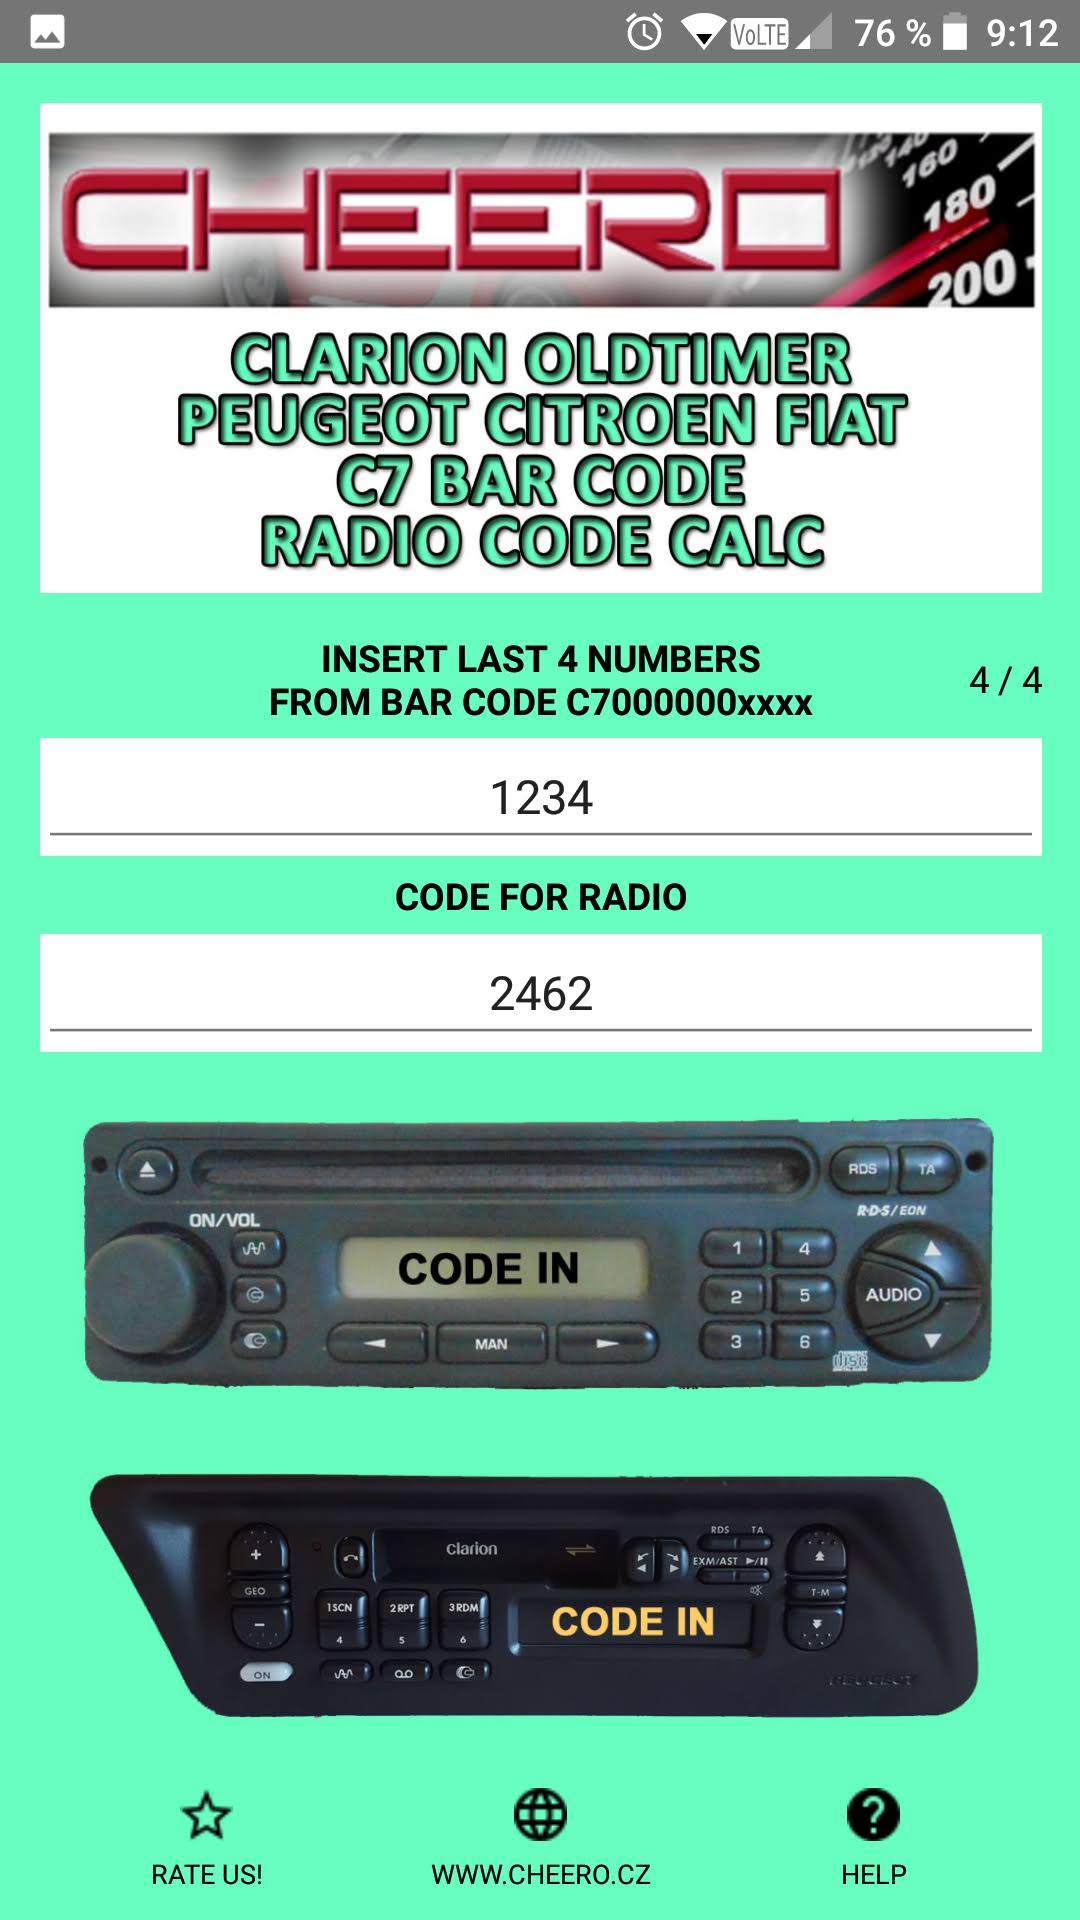 RADIO CODE FOR CLARION PU-2294 BAR CODE C7